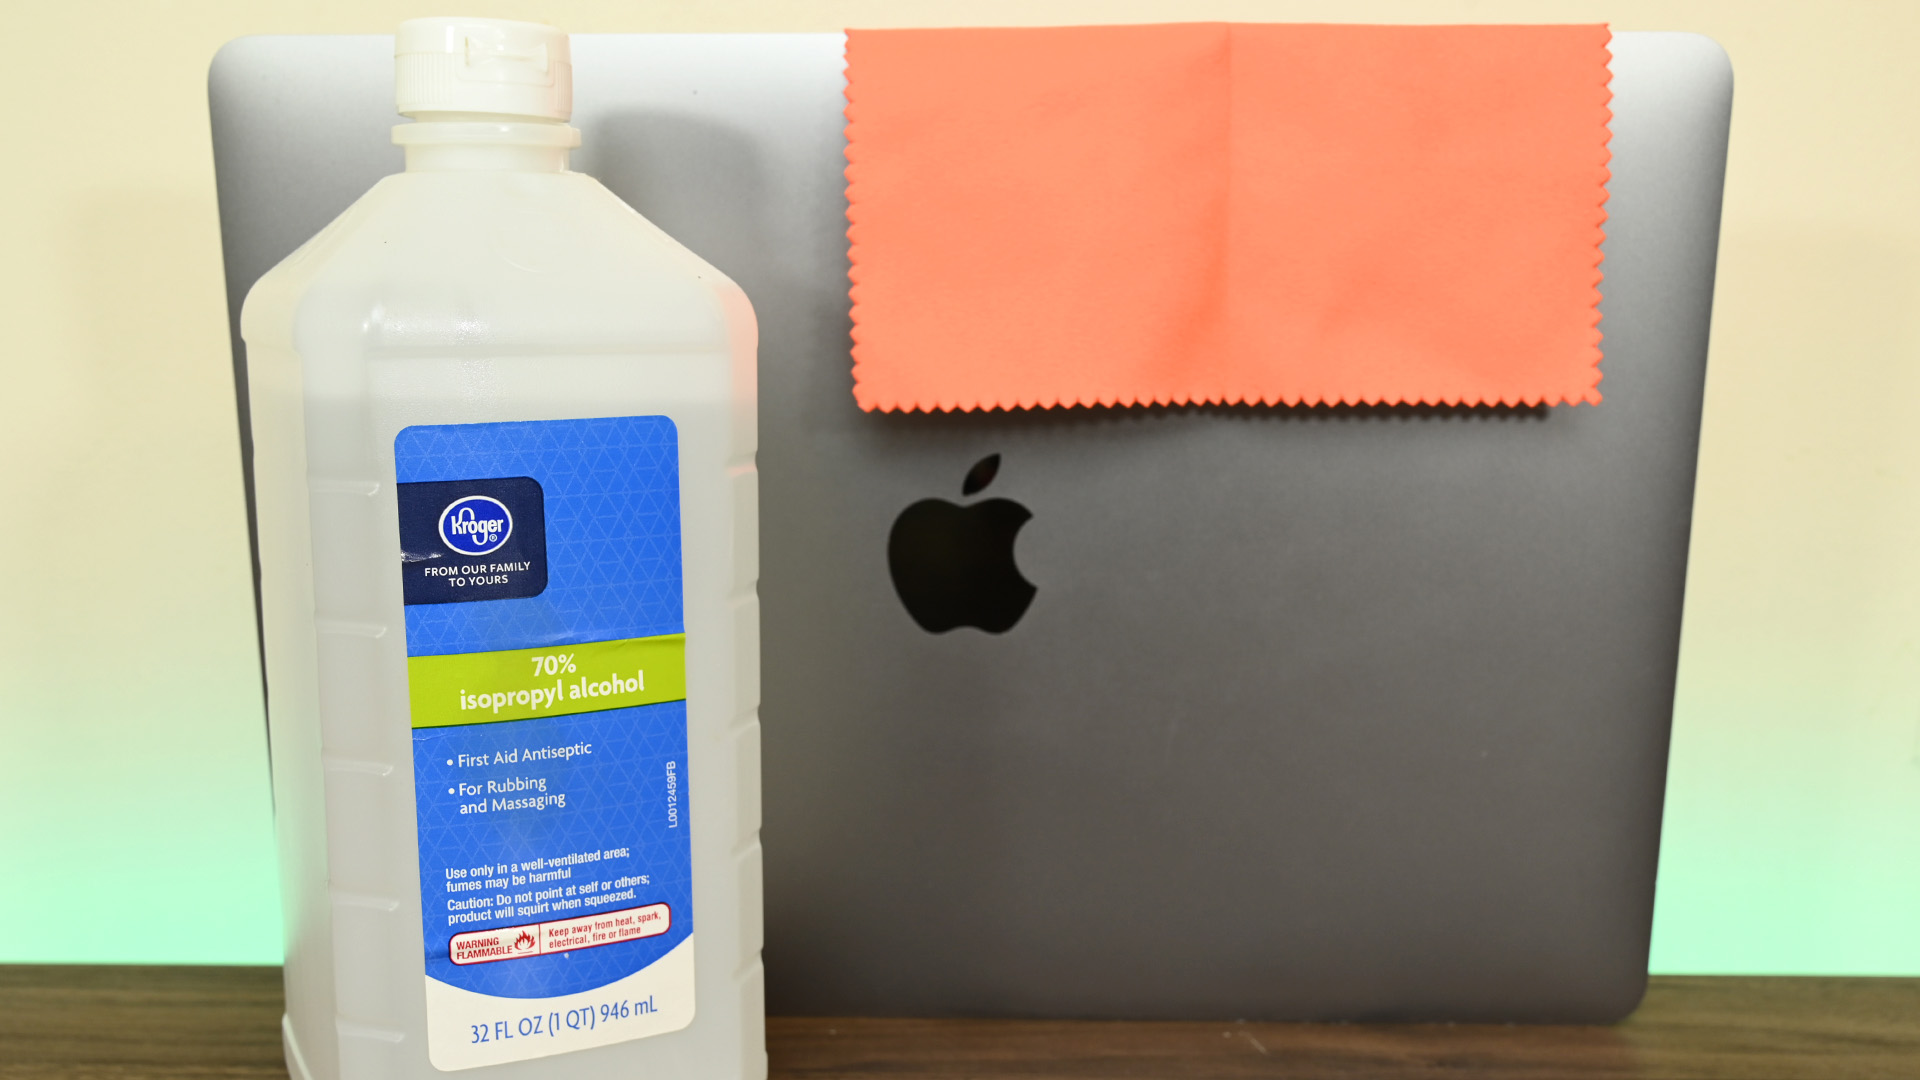 Macbook cleaning supplies